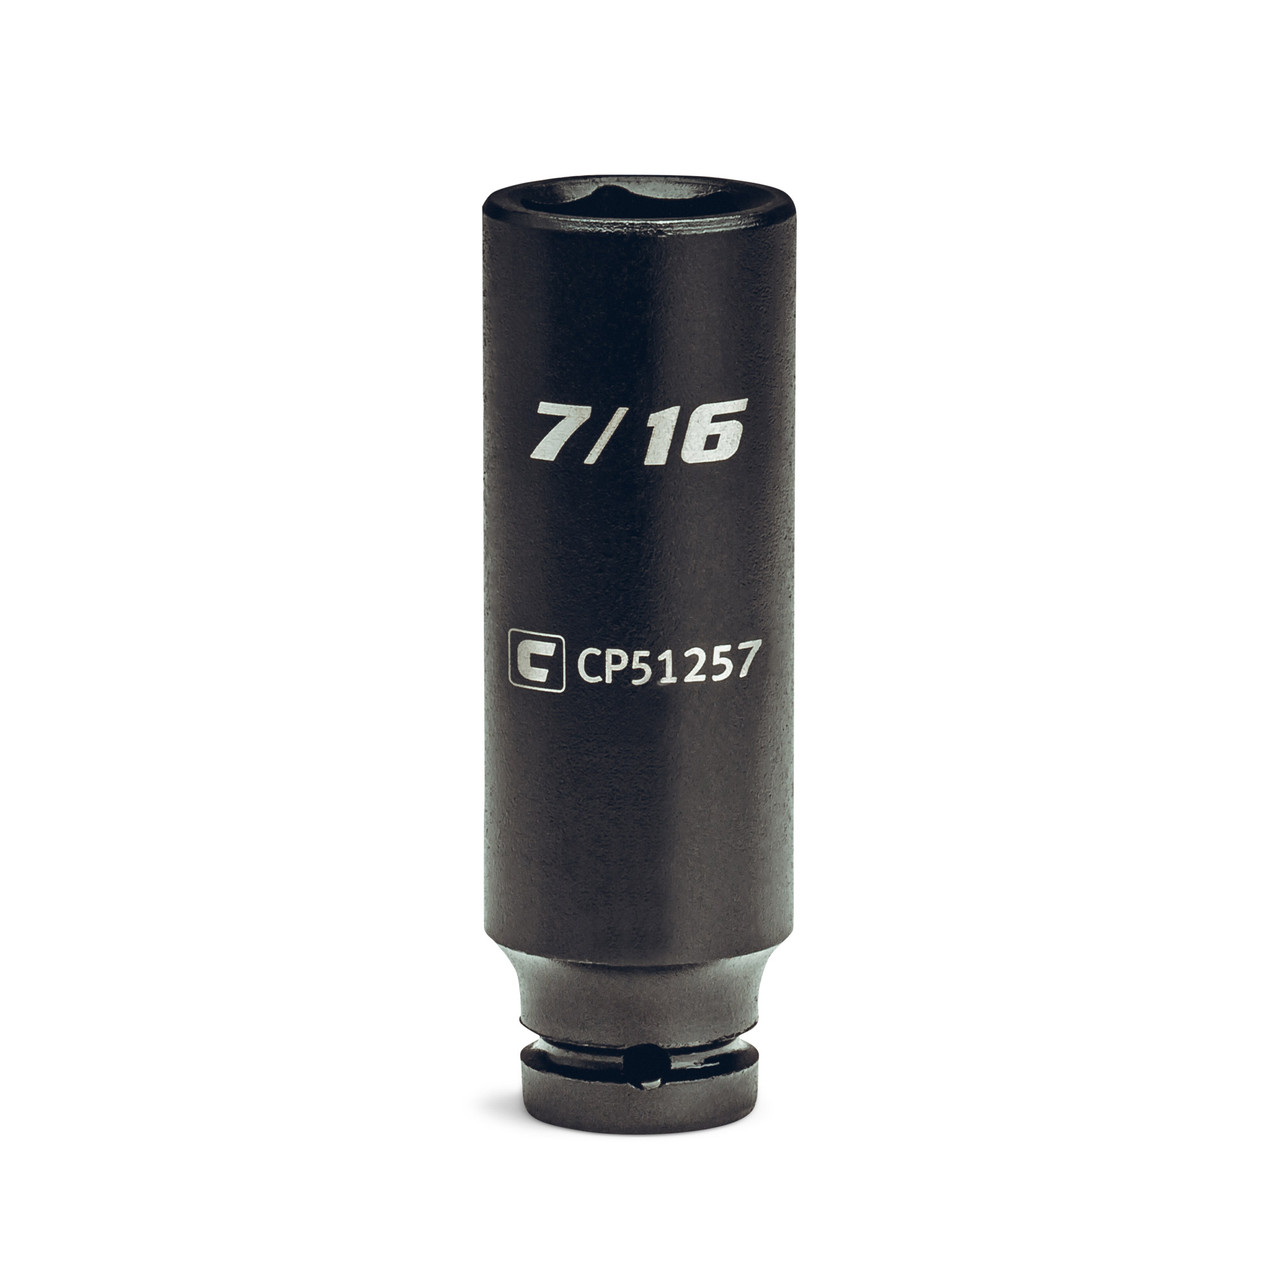 Capri Tools 7/16-Inch Deep Impact Socket, 1/4-Inch Drive, 6-Point, SAE